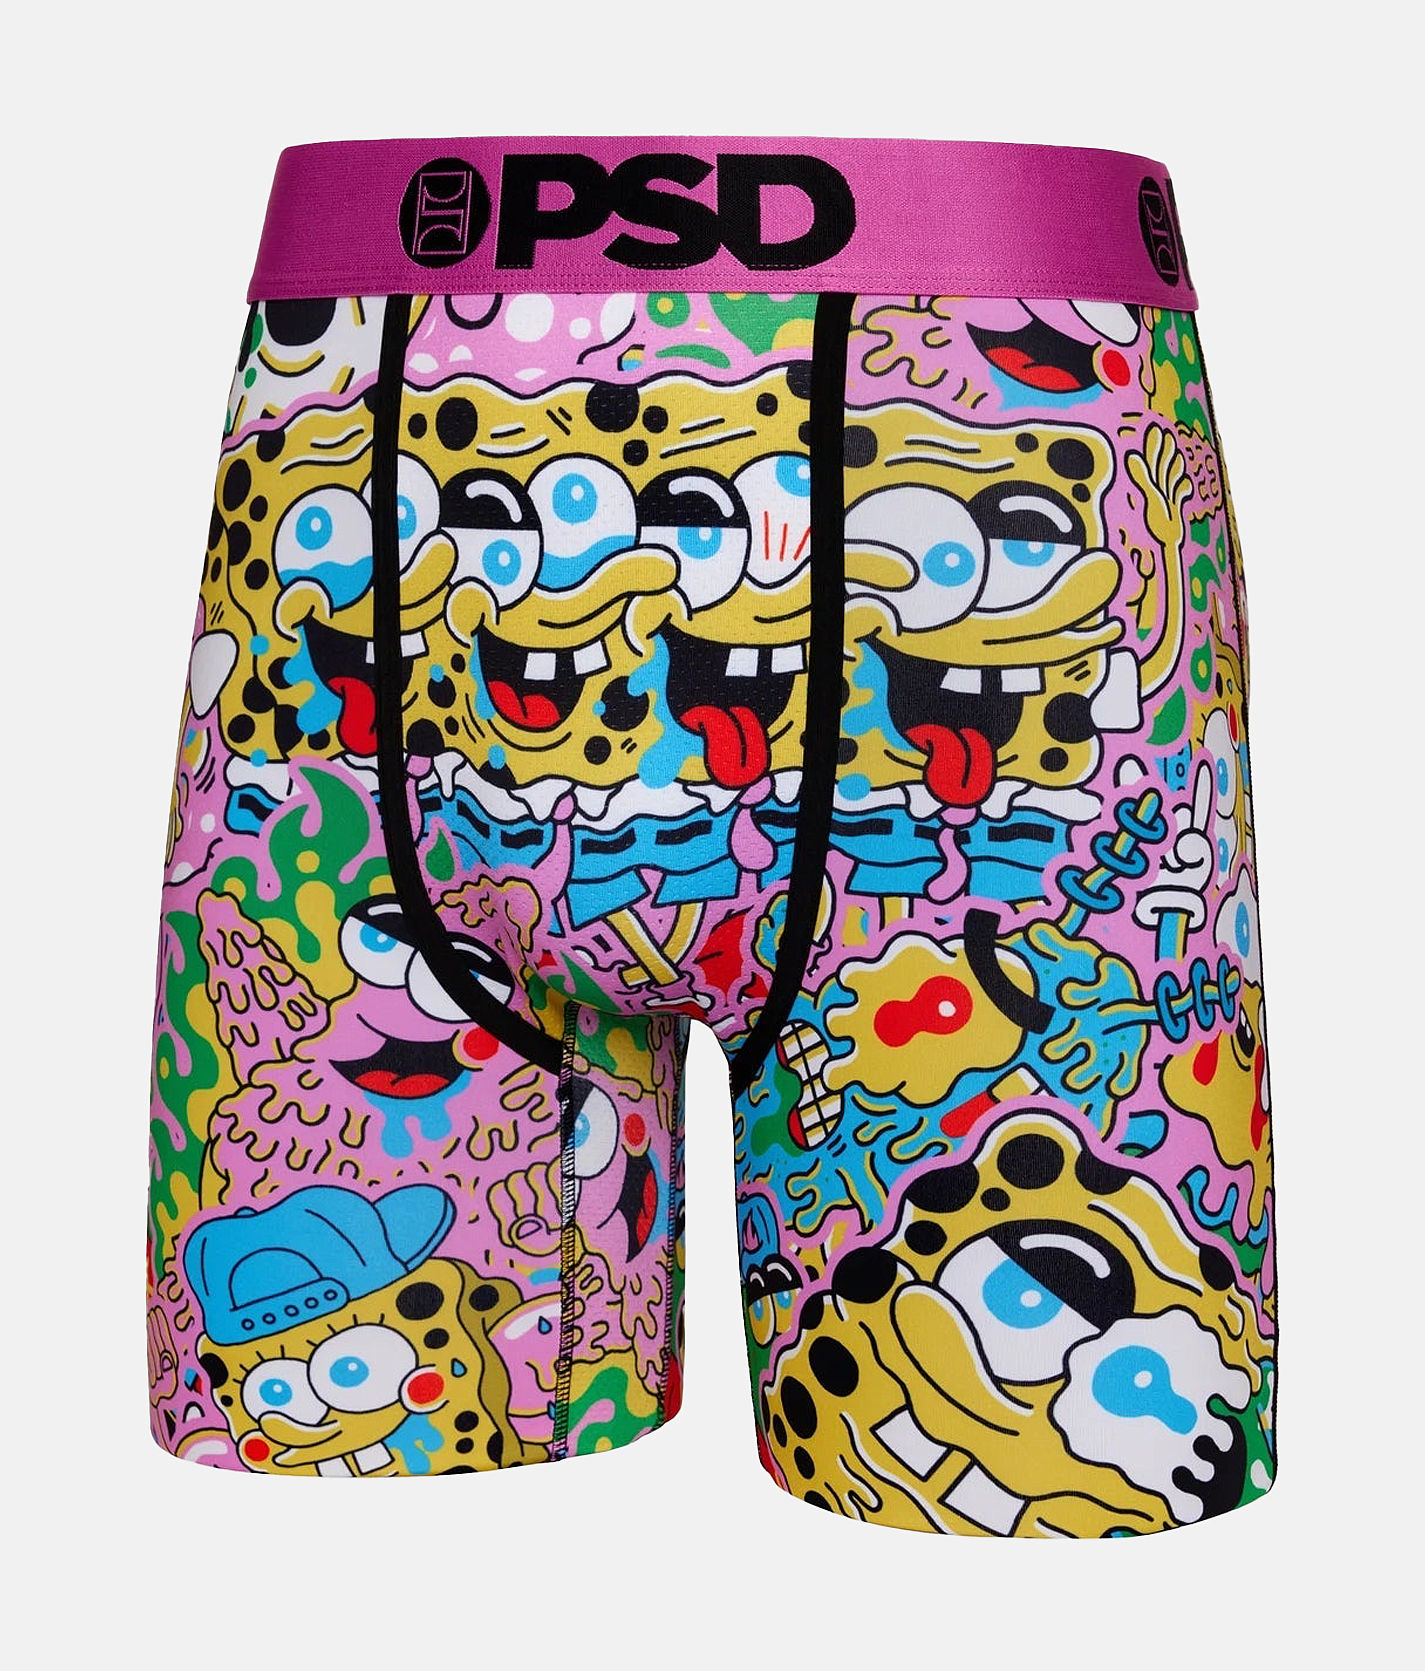 PSD Spongebob Krusty Pants Stretch Boxer Briefs - Men's Boxers in Multi